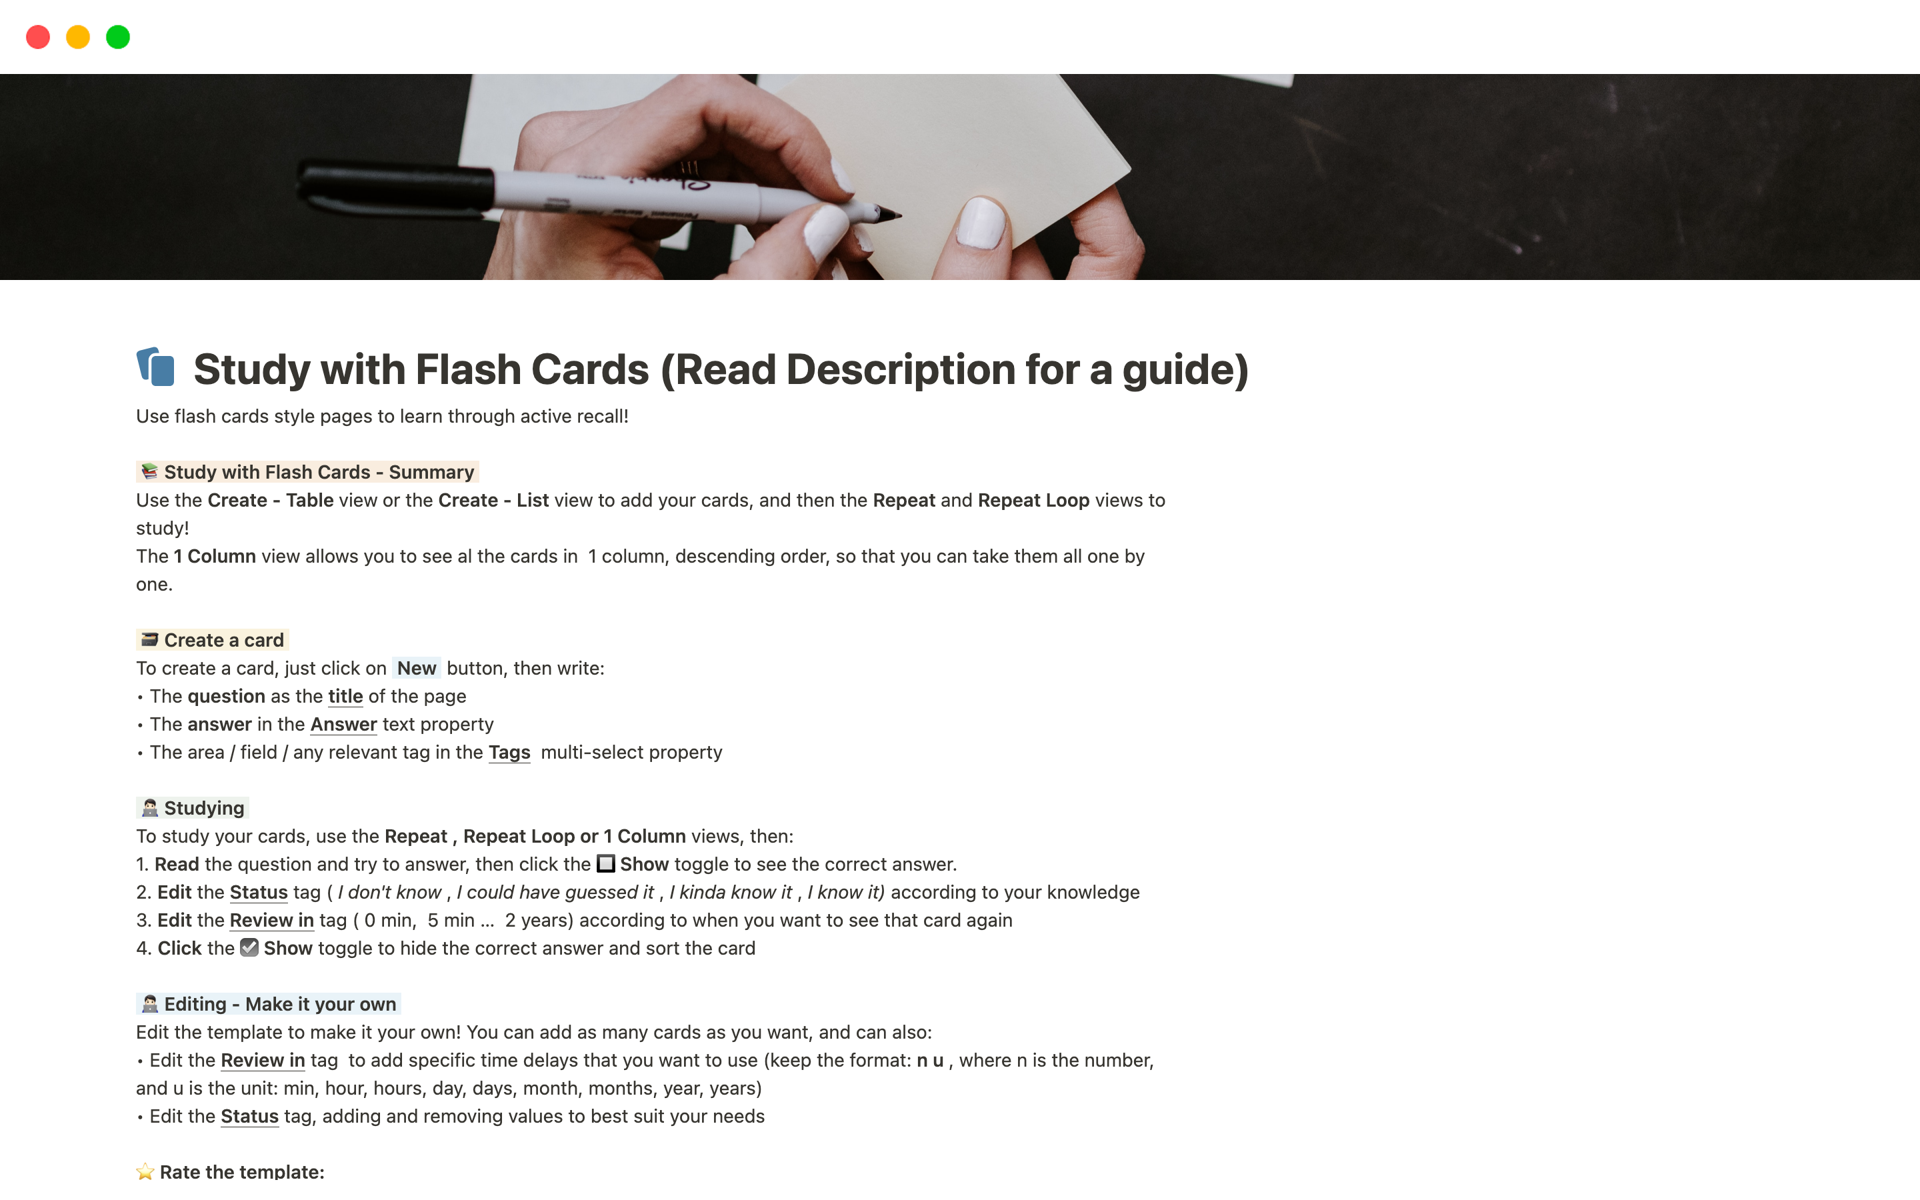 Vista previa de una plantilla para Flash Cards Template - Study using active recall